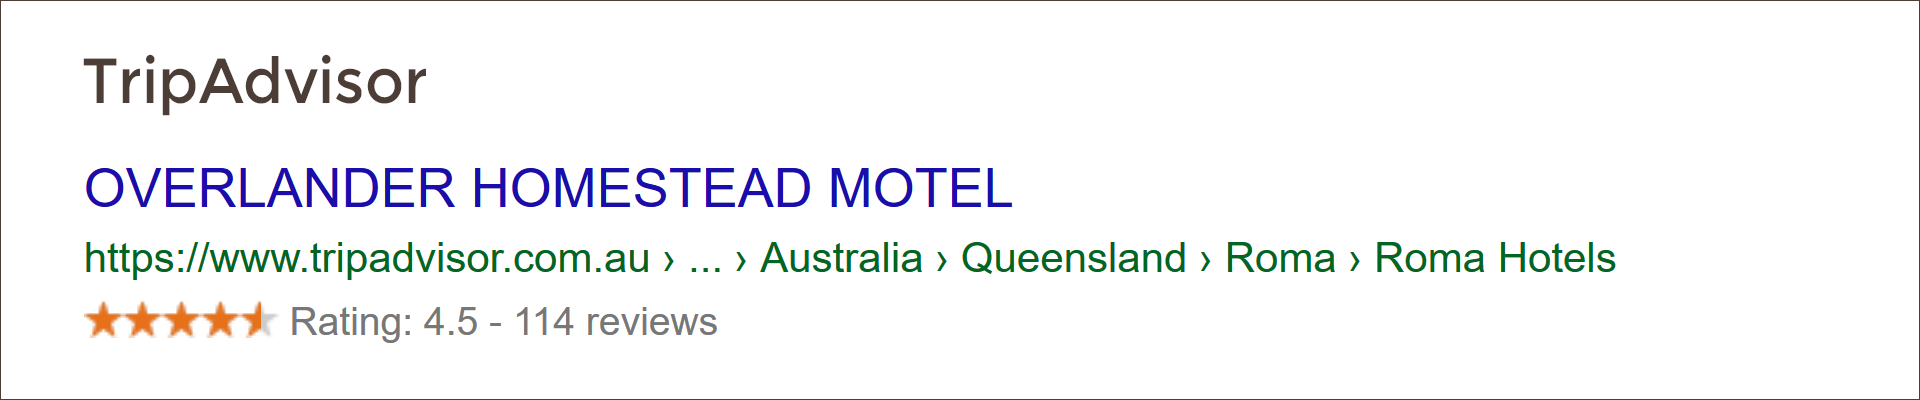 TripAdvisor Reviews of The Overlander Homestead Motel Roma Queensland